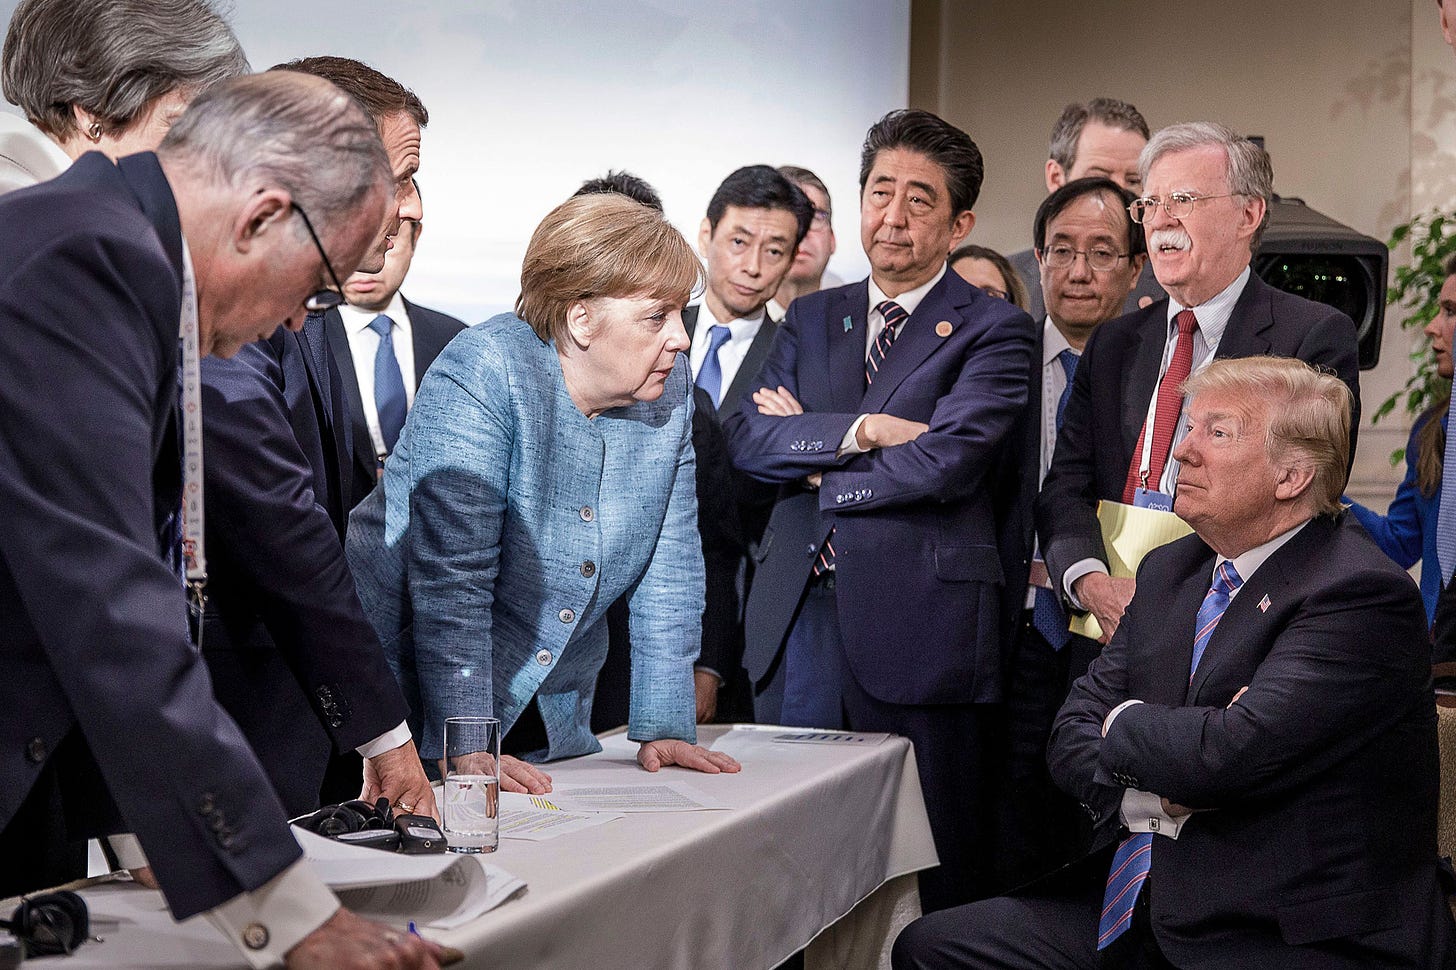 G-7 Summit: Angela Merkel and Donald Trump in Viral Photo | Time